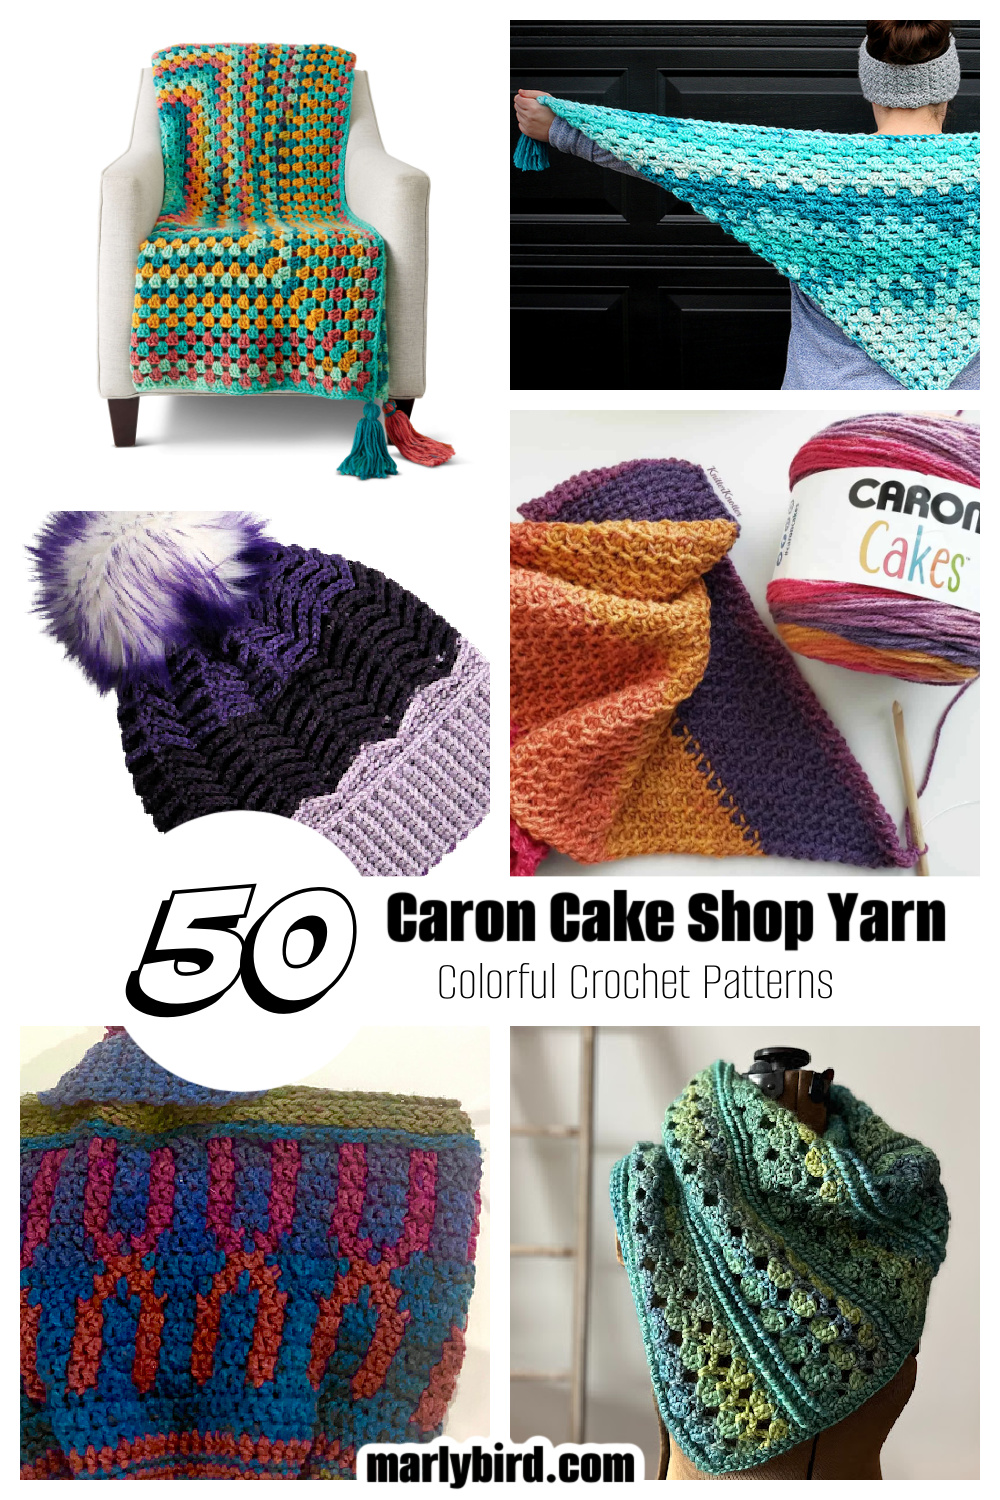 Caron Sprinkle Cakes Yarn - Discontinued Shades